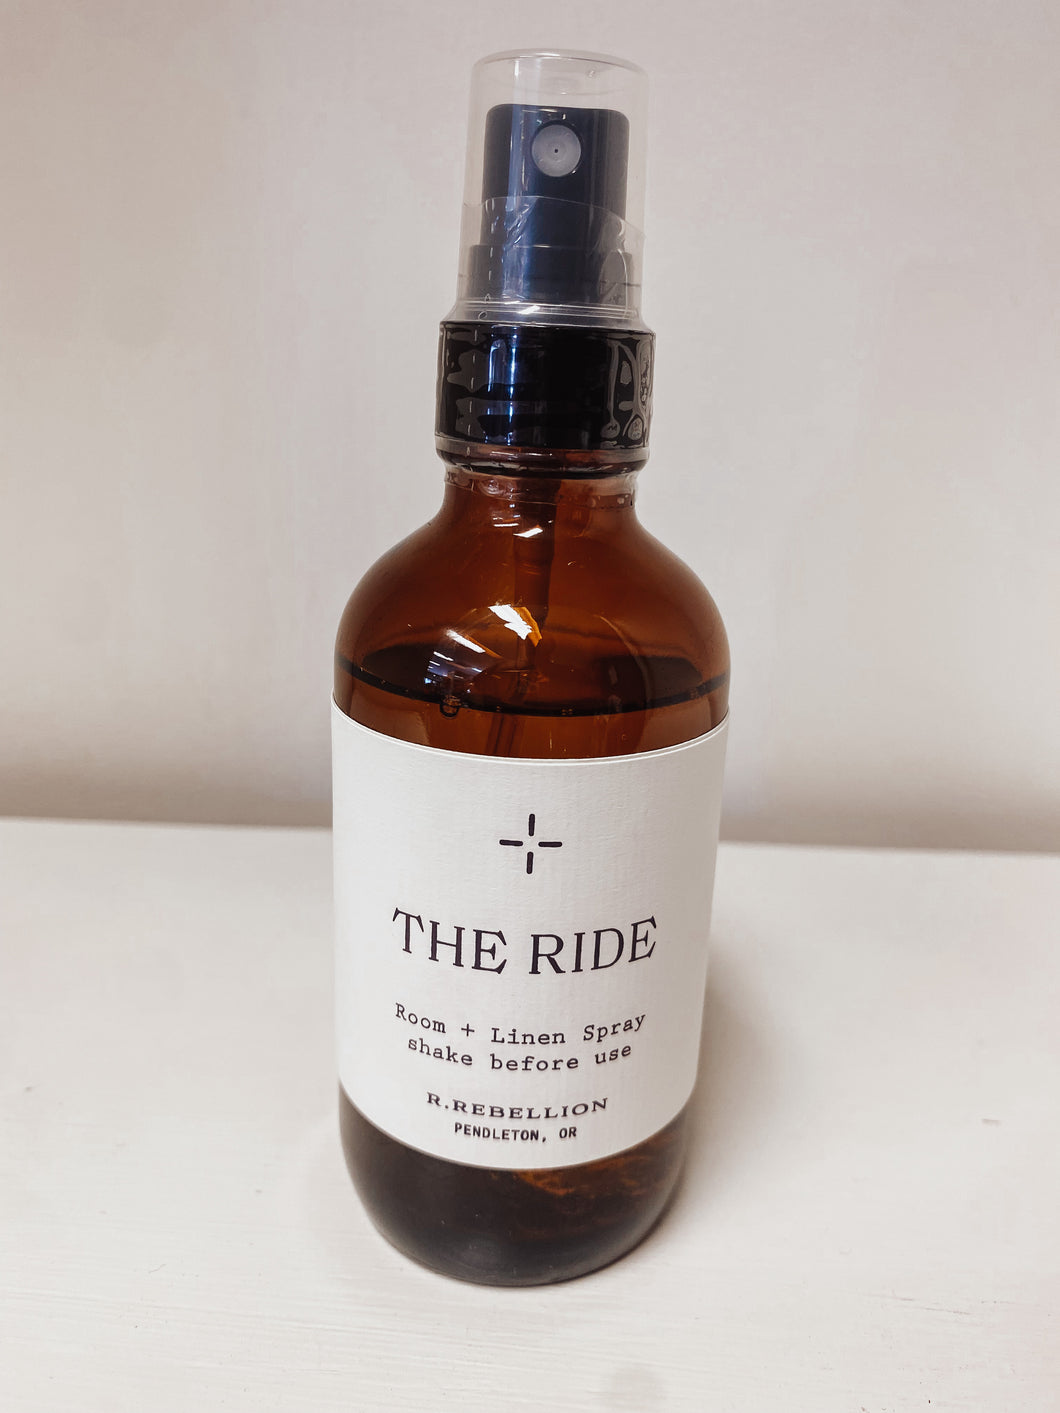 The Ride Room + Linen Spray